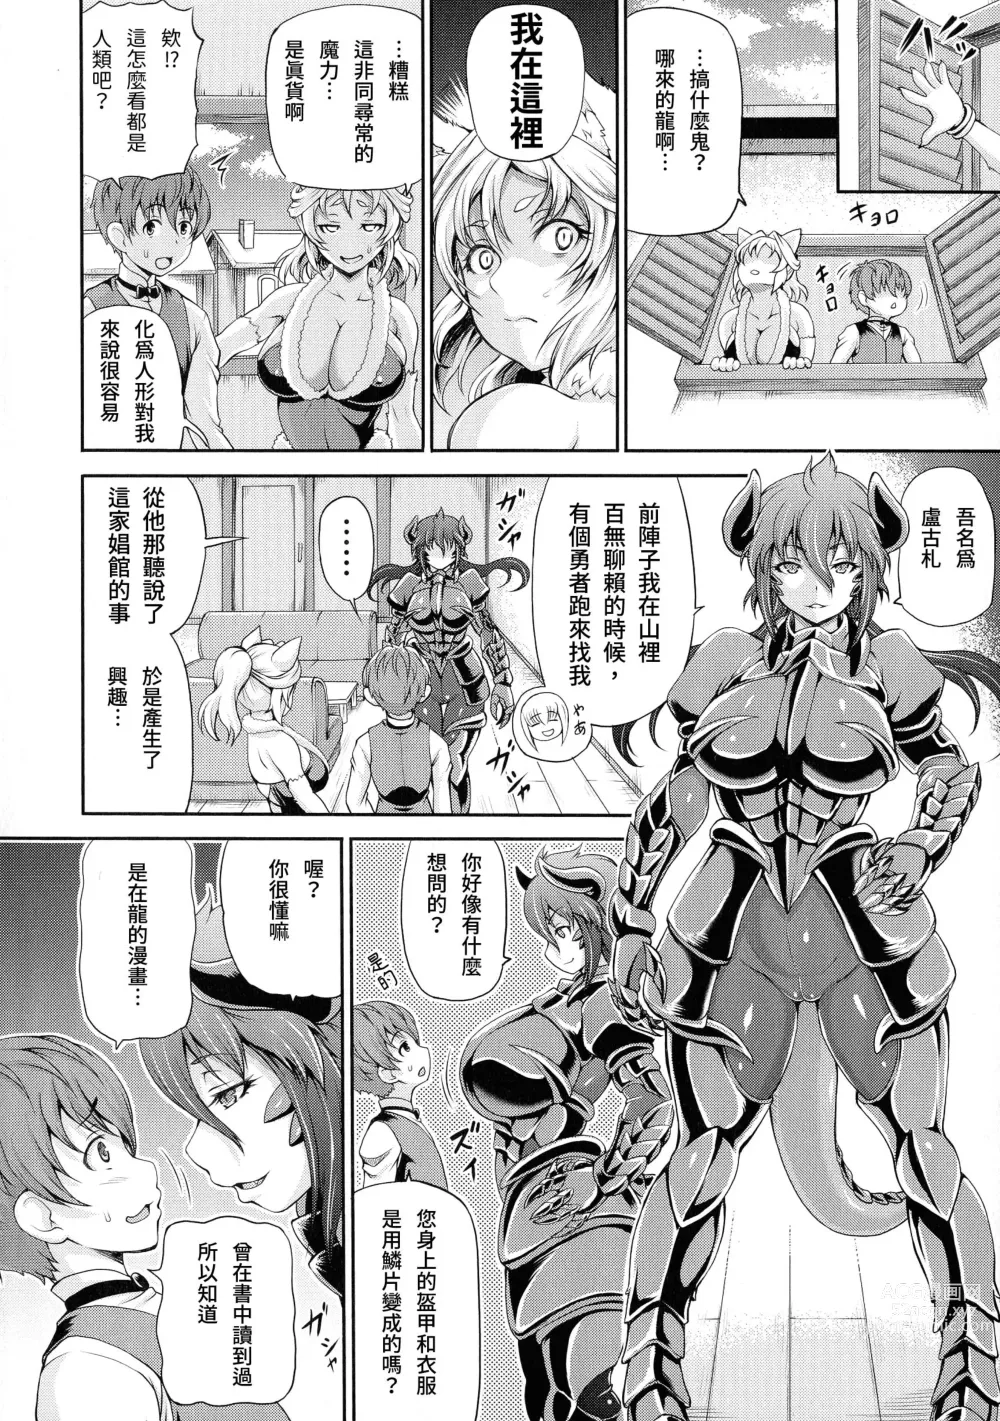 Page 6 of manga Isekai Shoukan 2 Ch. 1-4, 6-8